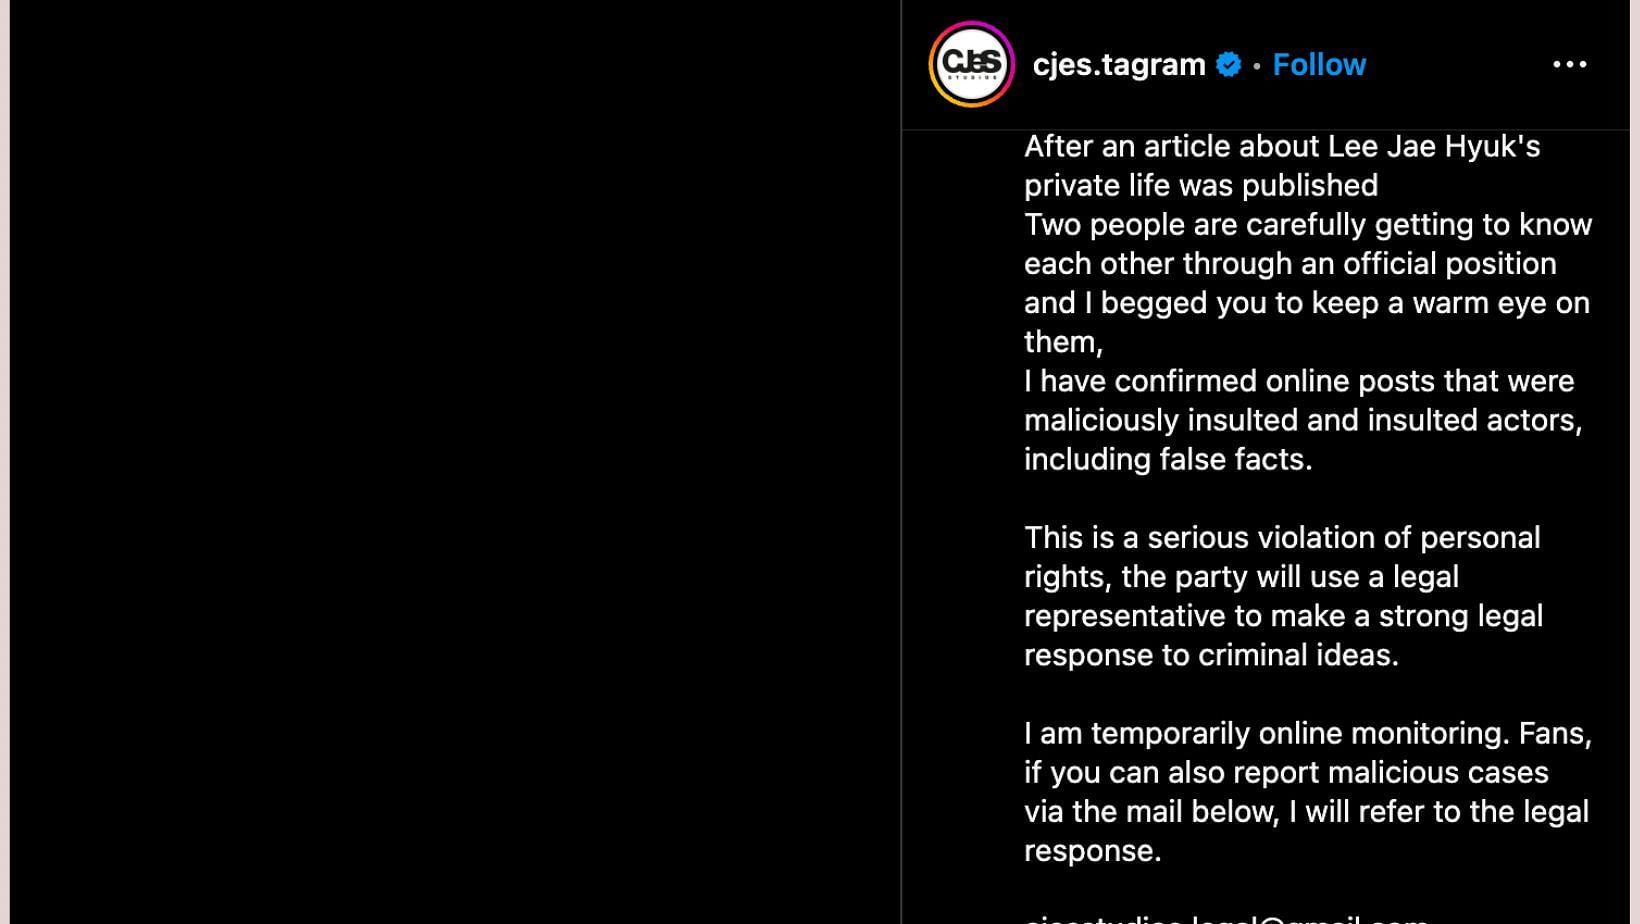 C-Jes Entertainment issues statement on Instagram to take legal action against perpetrators. (Image via Instagra/@ cjes.tagram & translation via Google)